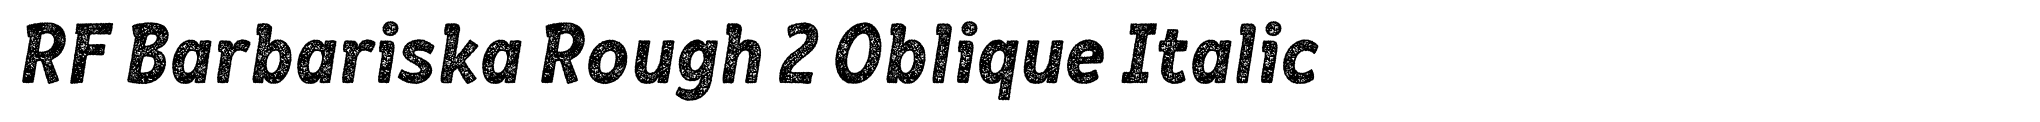 RF Barbariska Rough 2 Oblique Italic image